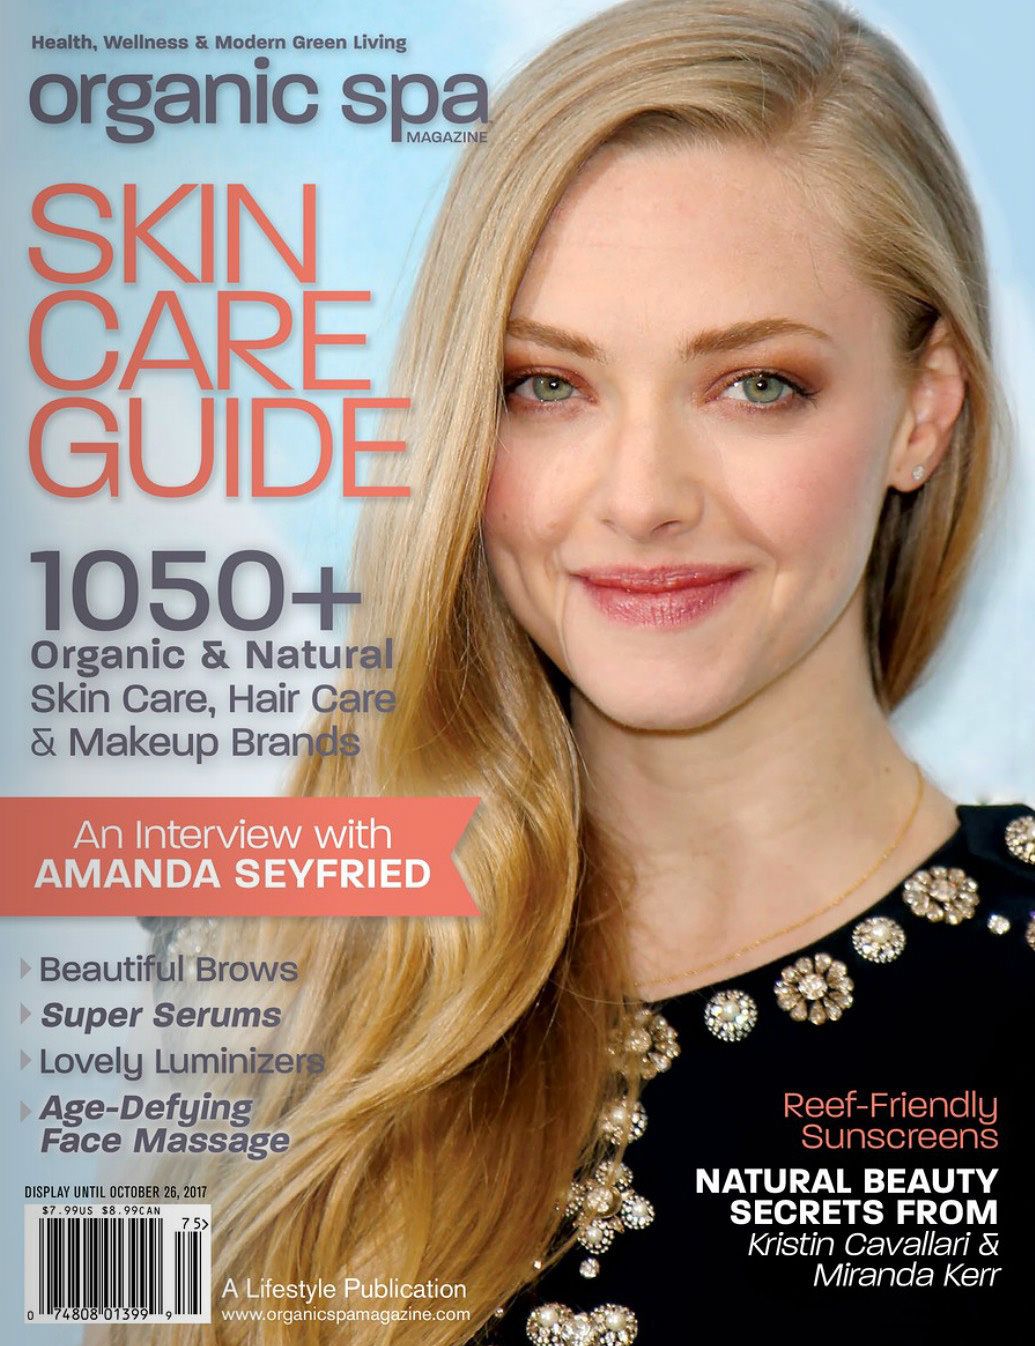 Organic Spa Magazine Skin Care Guide 2017 Leaf People Skin Care